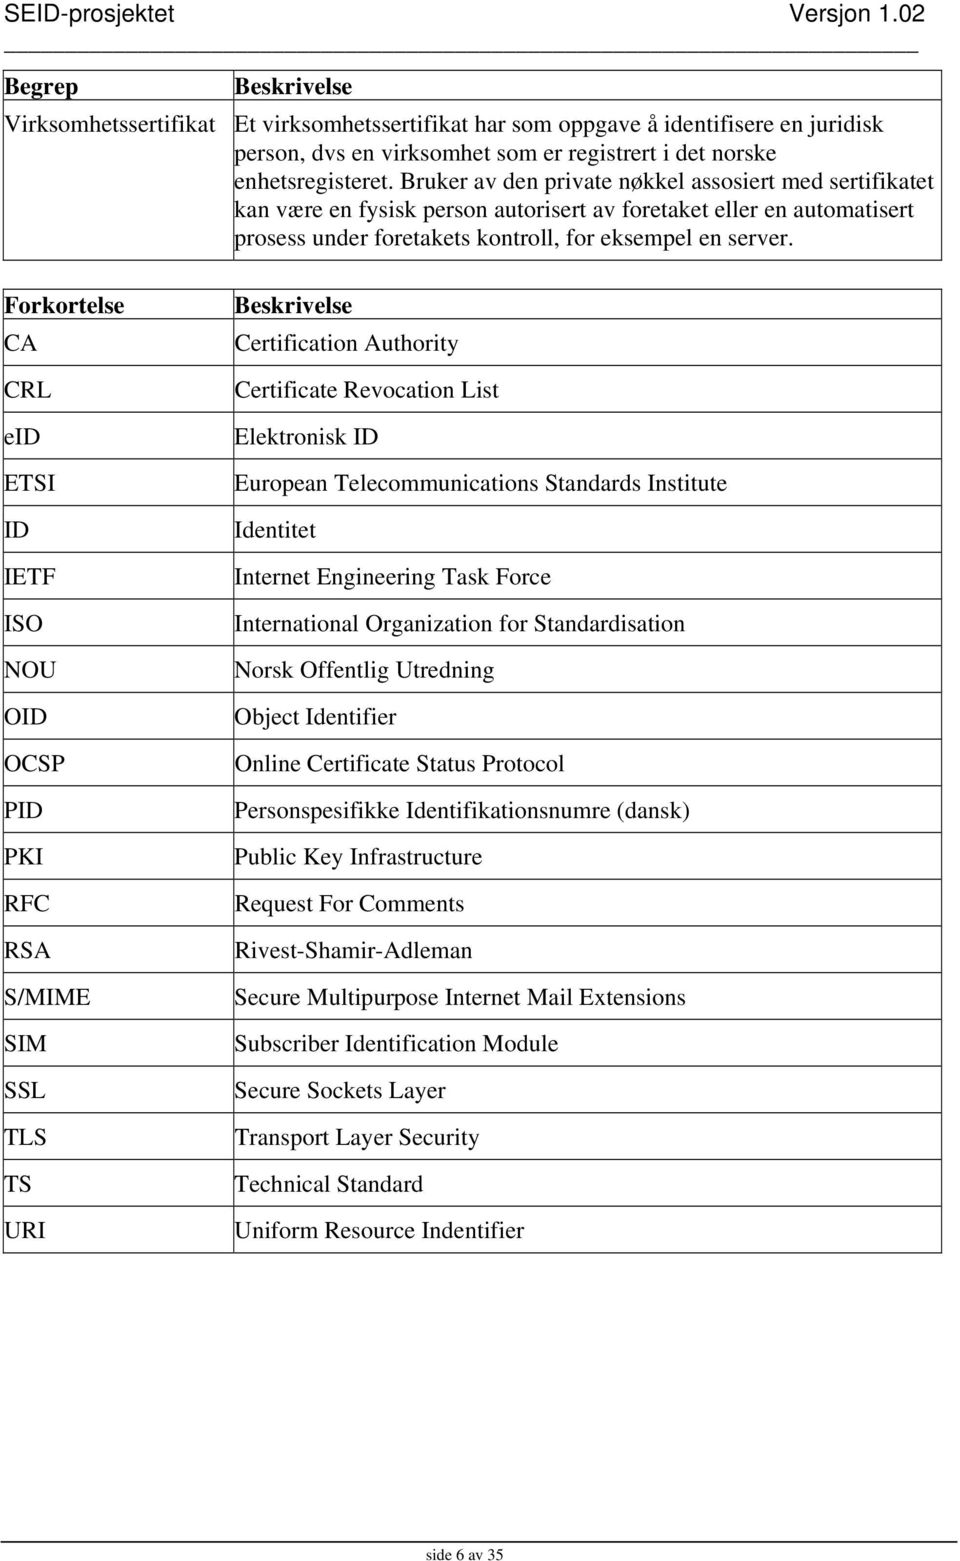 Forkortelse CA CRL eid ETSI ID IETF ISO NOU OID OCSP PID PKI RFC RSA S/MIME SIM SSL TLS TS URI Beskrivelse Certification Authority Certificate Revocation List Elektronisk ID European